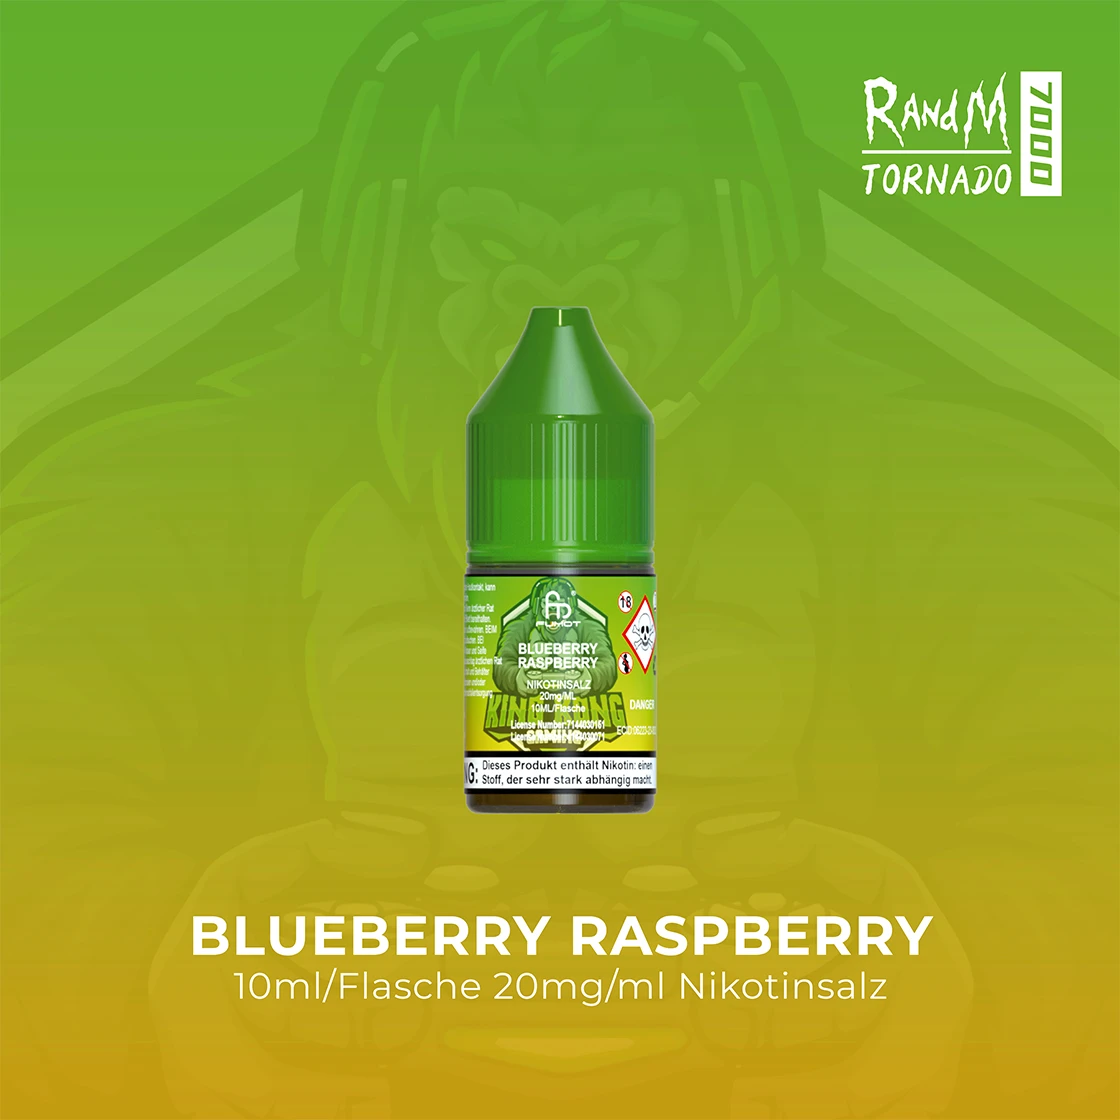 RandM Tornado 7000 Blueberry Raspberry E-Liquid Nikotinsalz 20 mg | Vape Liquids 1